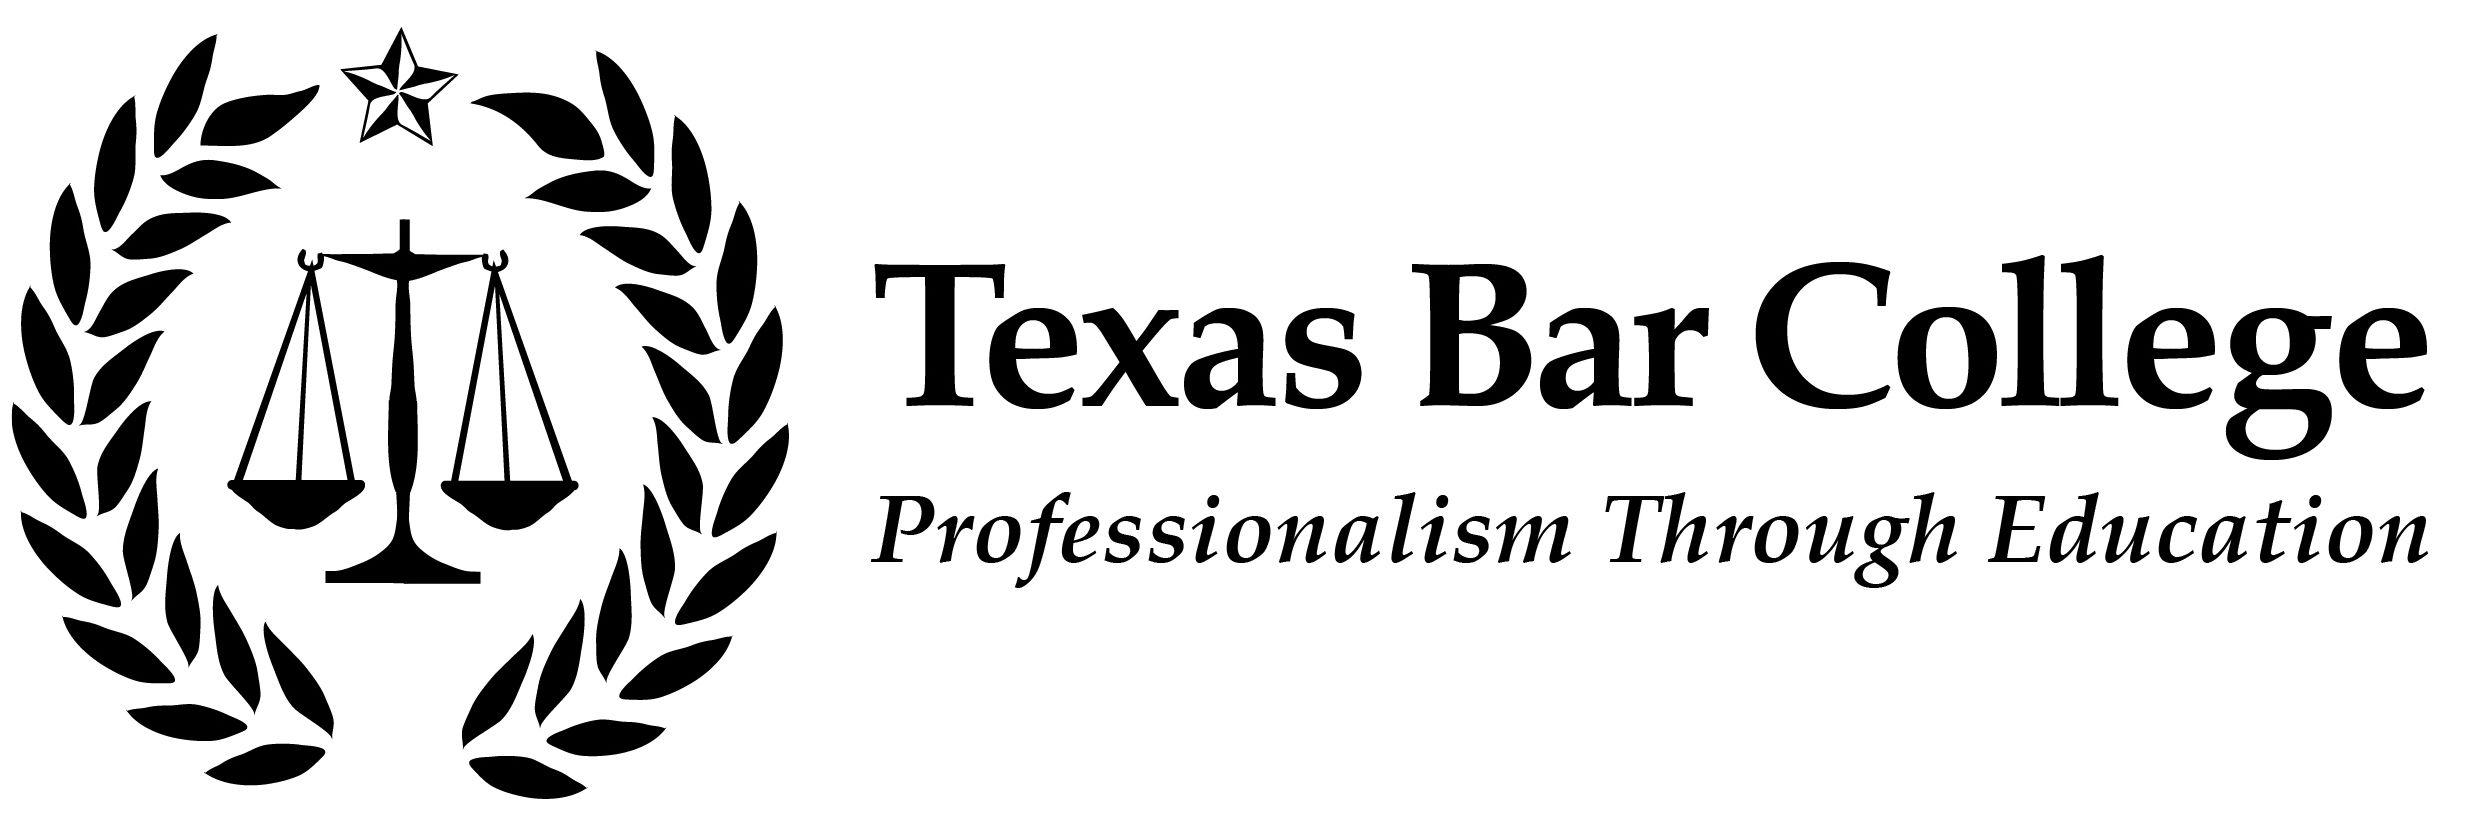 Black and White College Logo - College Logo. Texas Bar College